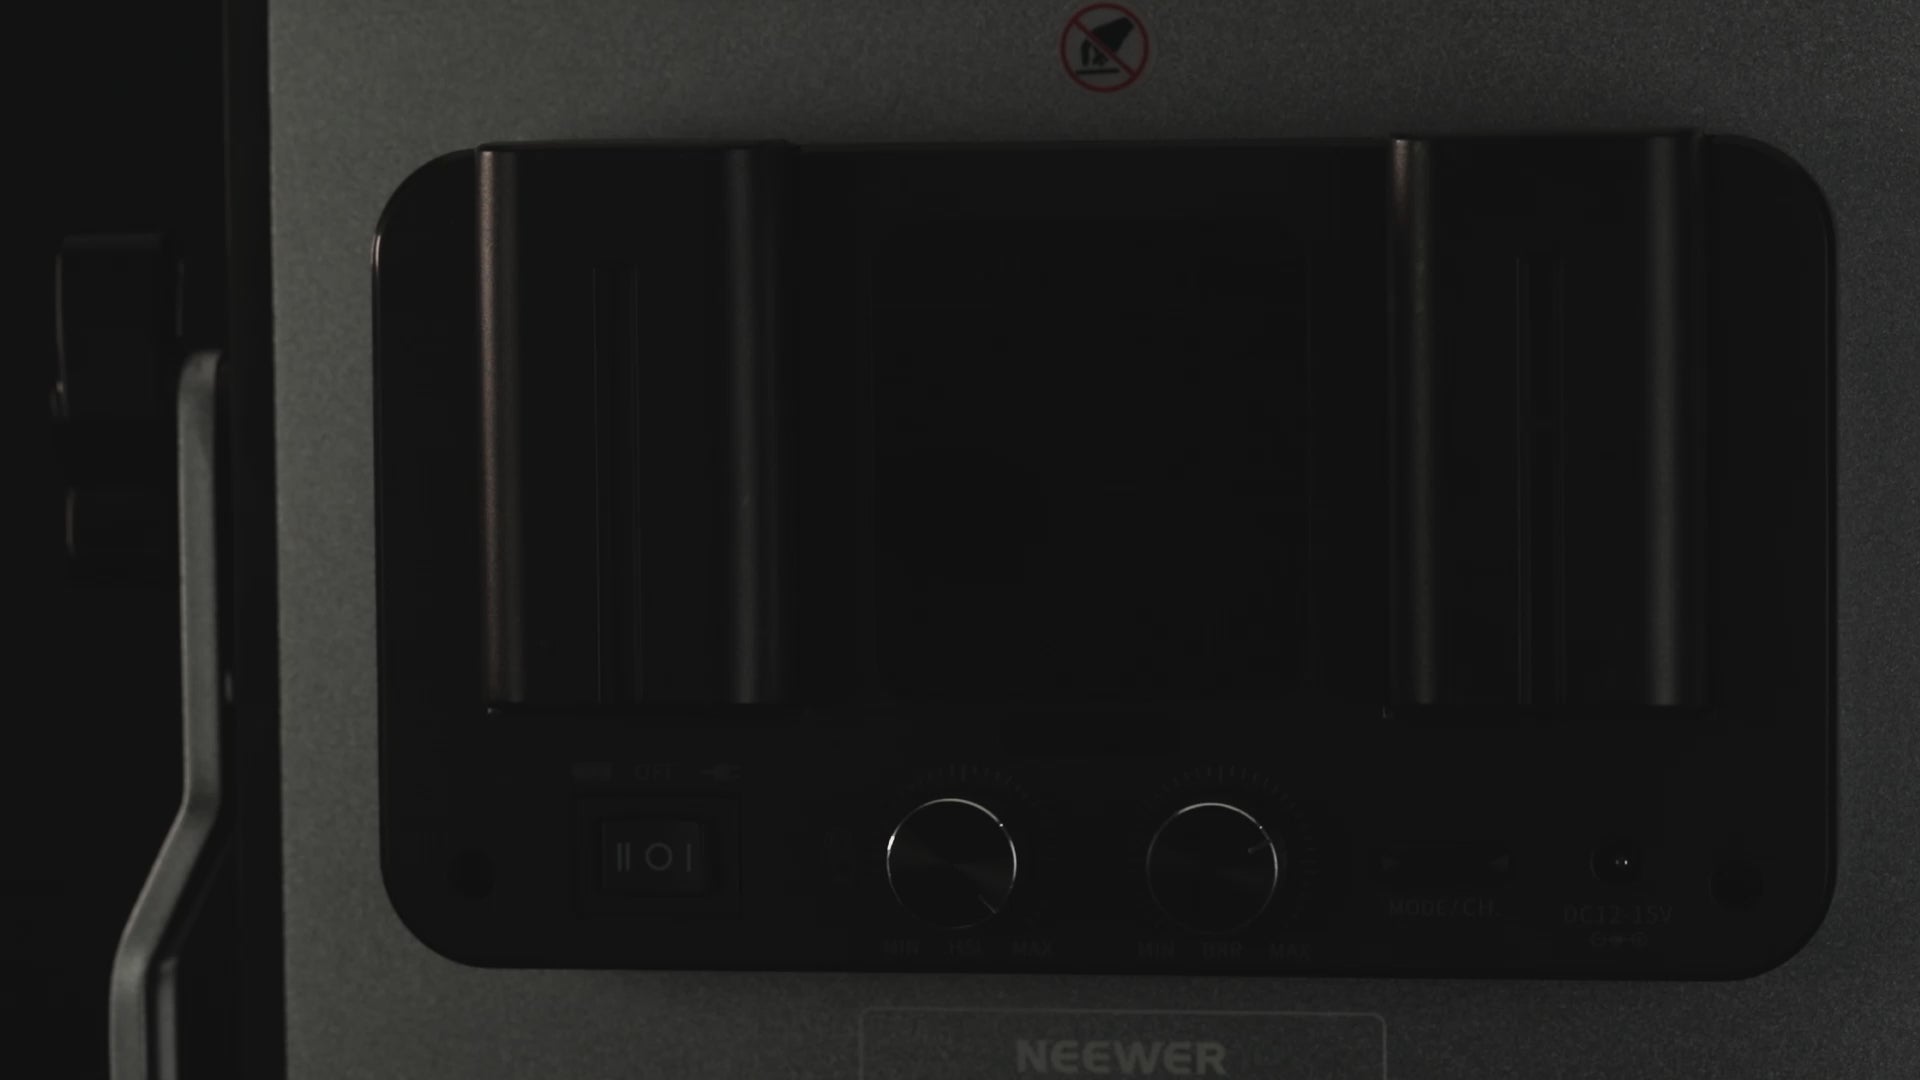 Neewer RGB LED Video Light with APP Control 50W 660 PRO Video Lighting Kit